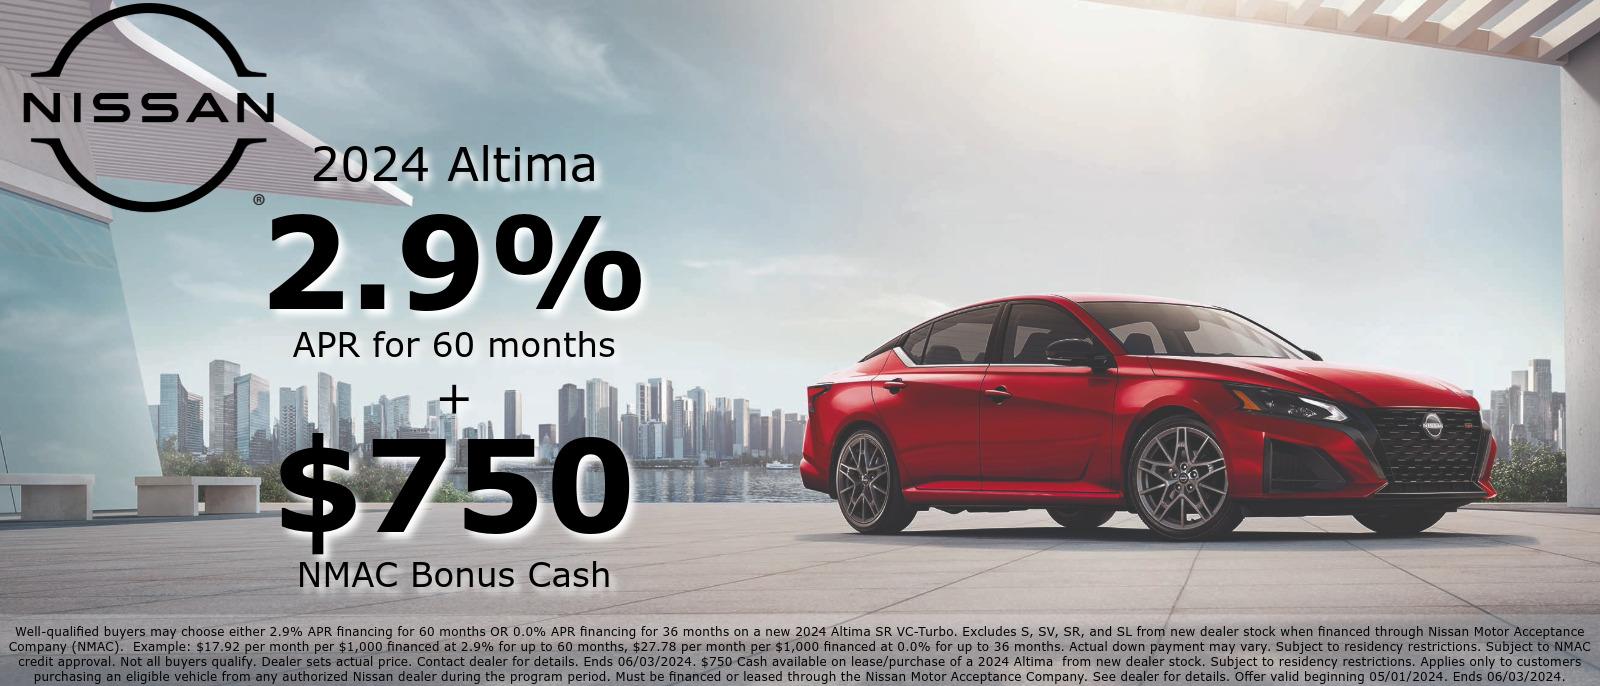 2024 Altima - 2.9% APR for 60 months and $750 NMAC Bonus Cash